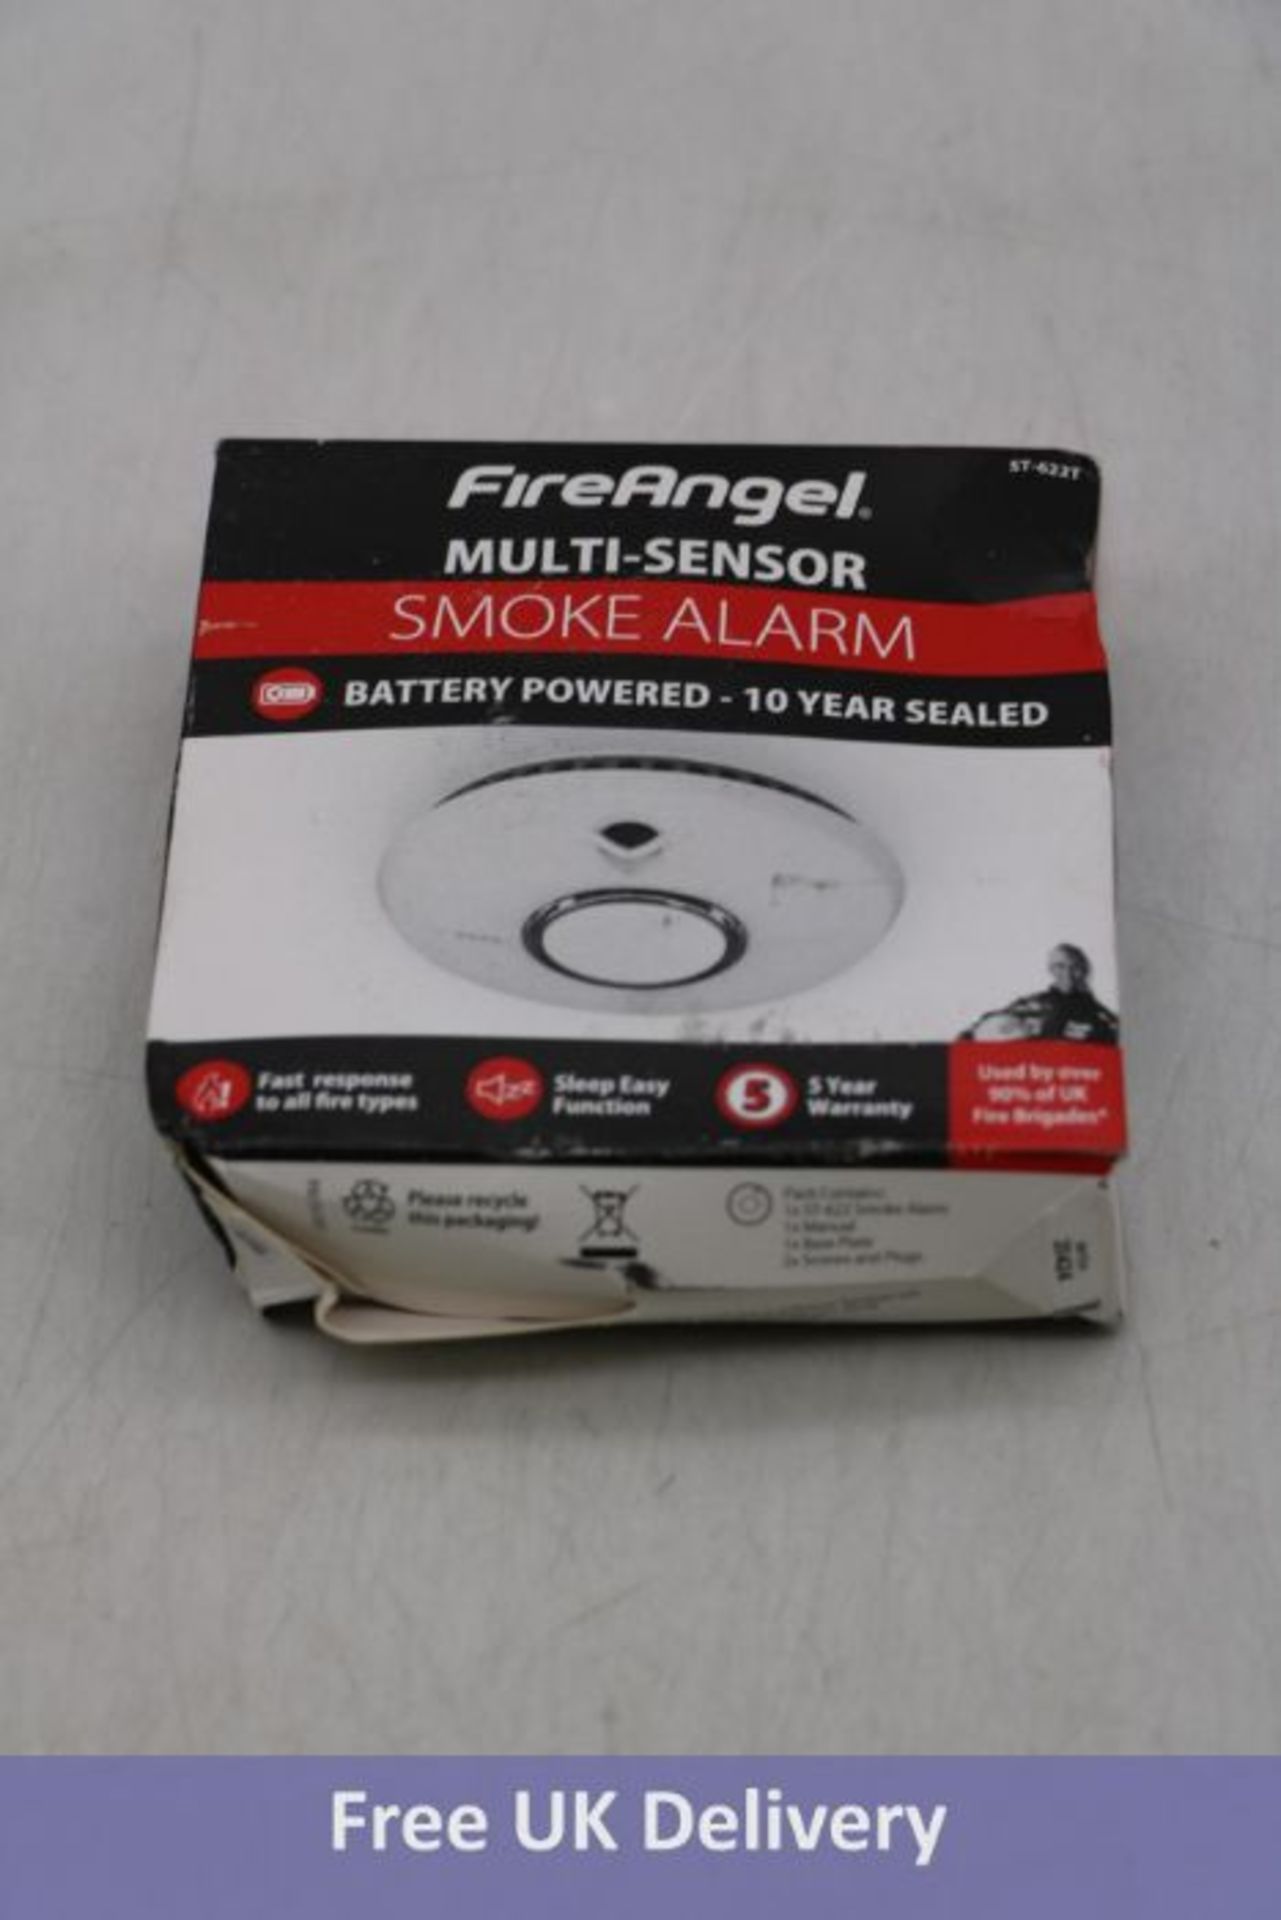 Four Fire Angel Multi Sensor Smoke Alarm. Box damaged